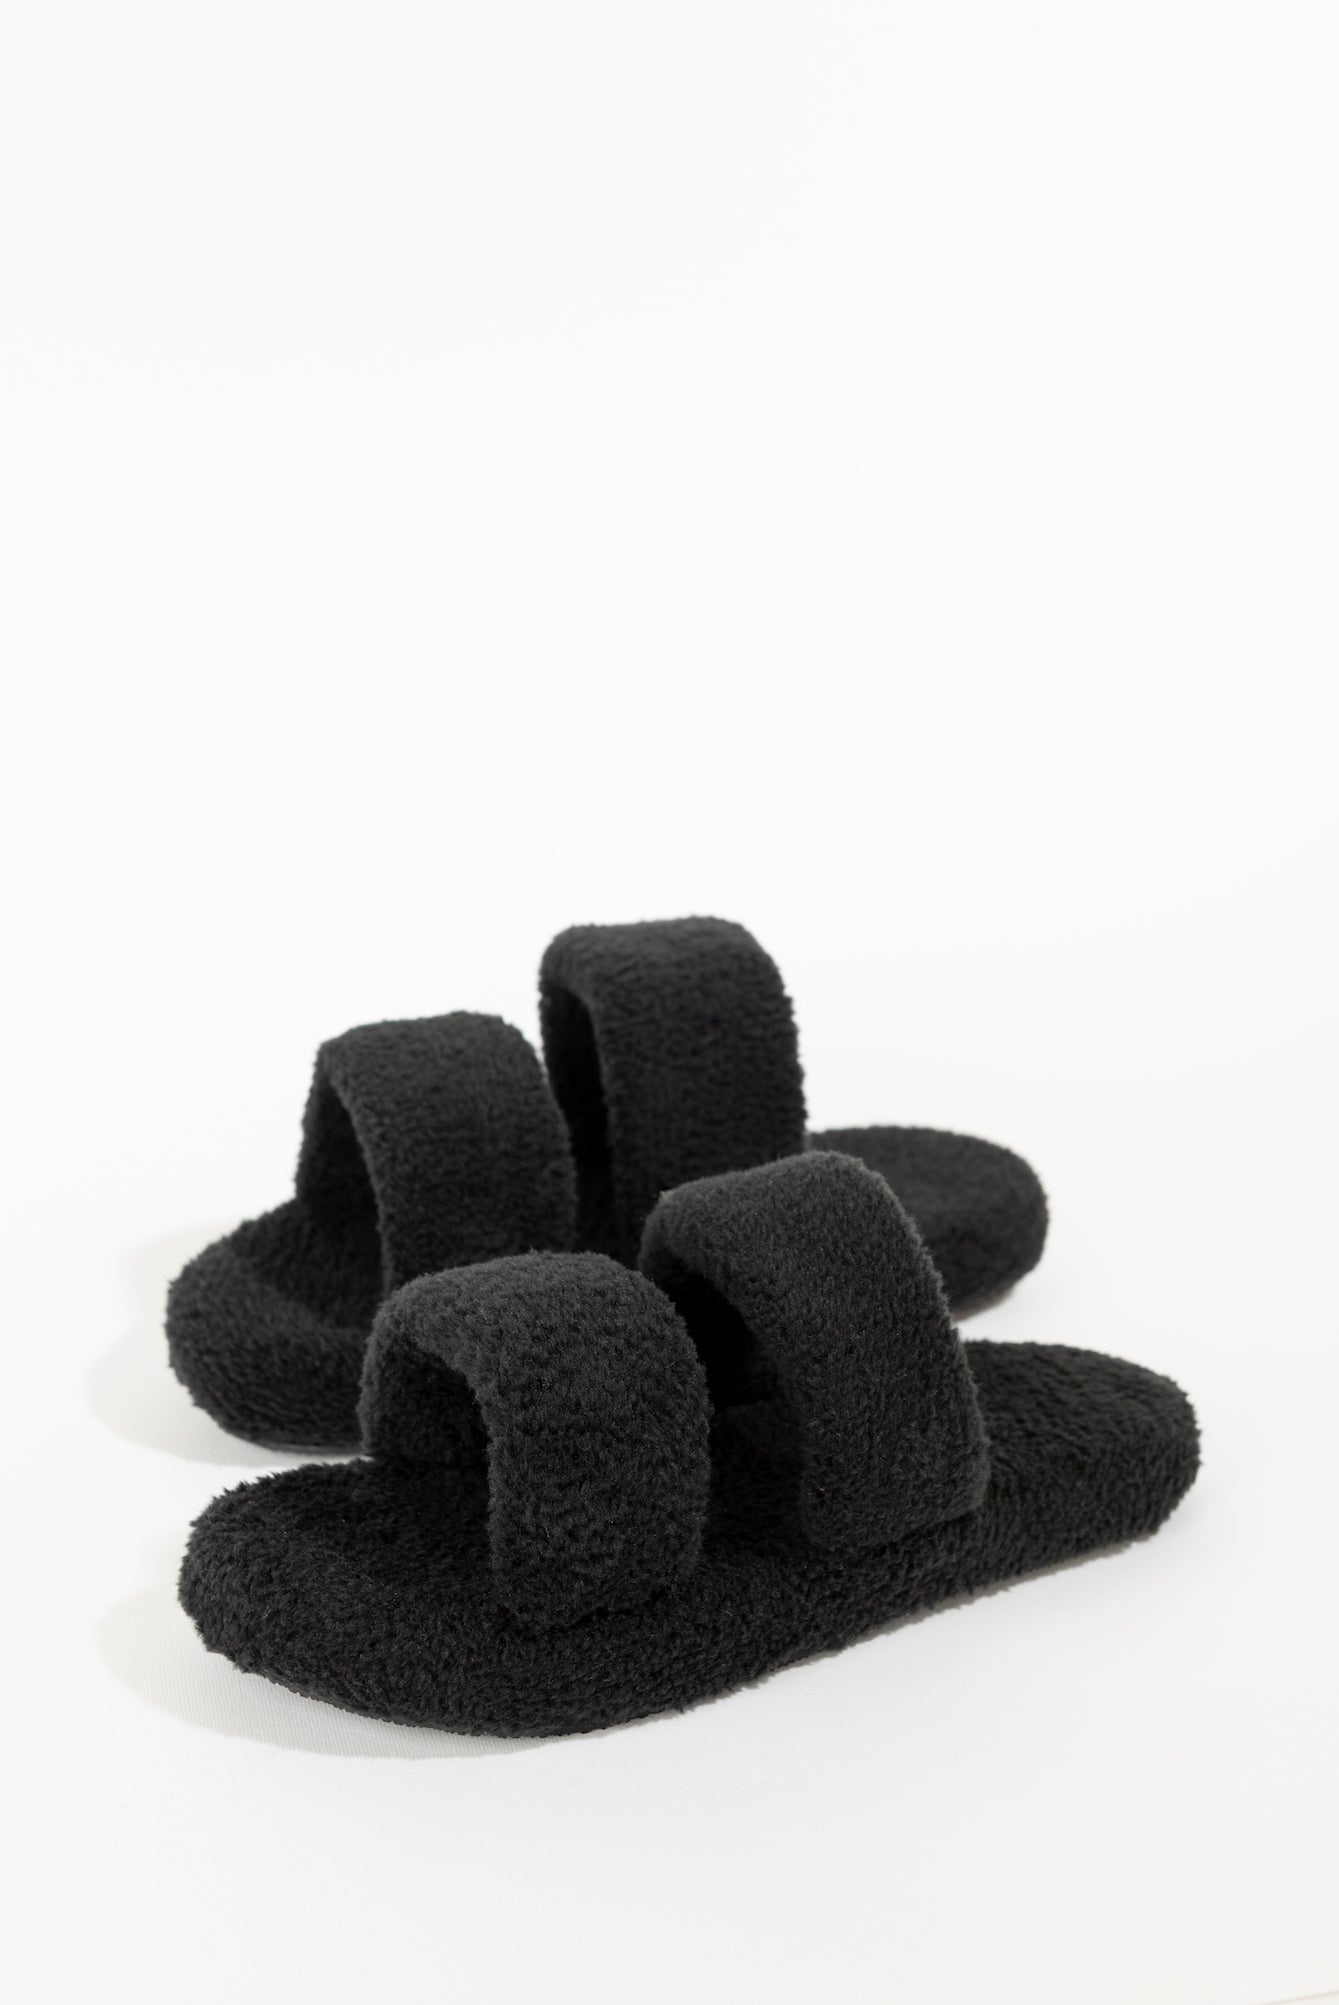 Fluffy Slippers in black